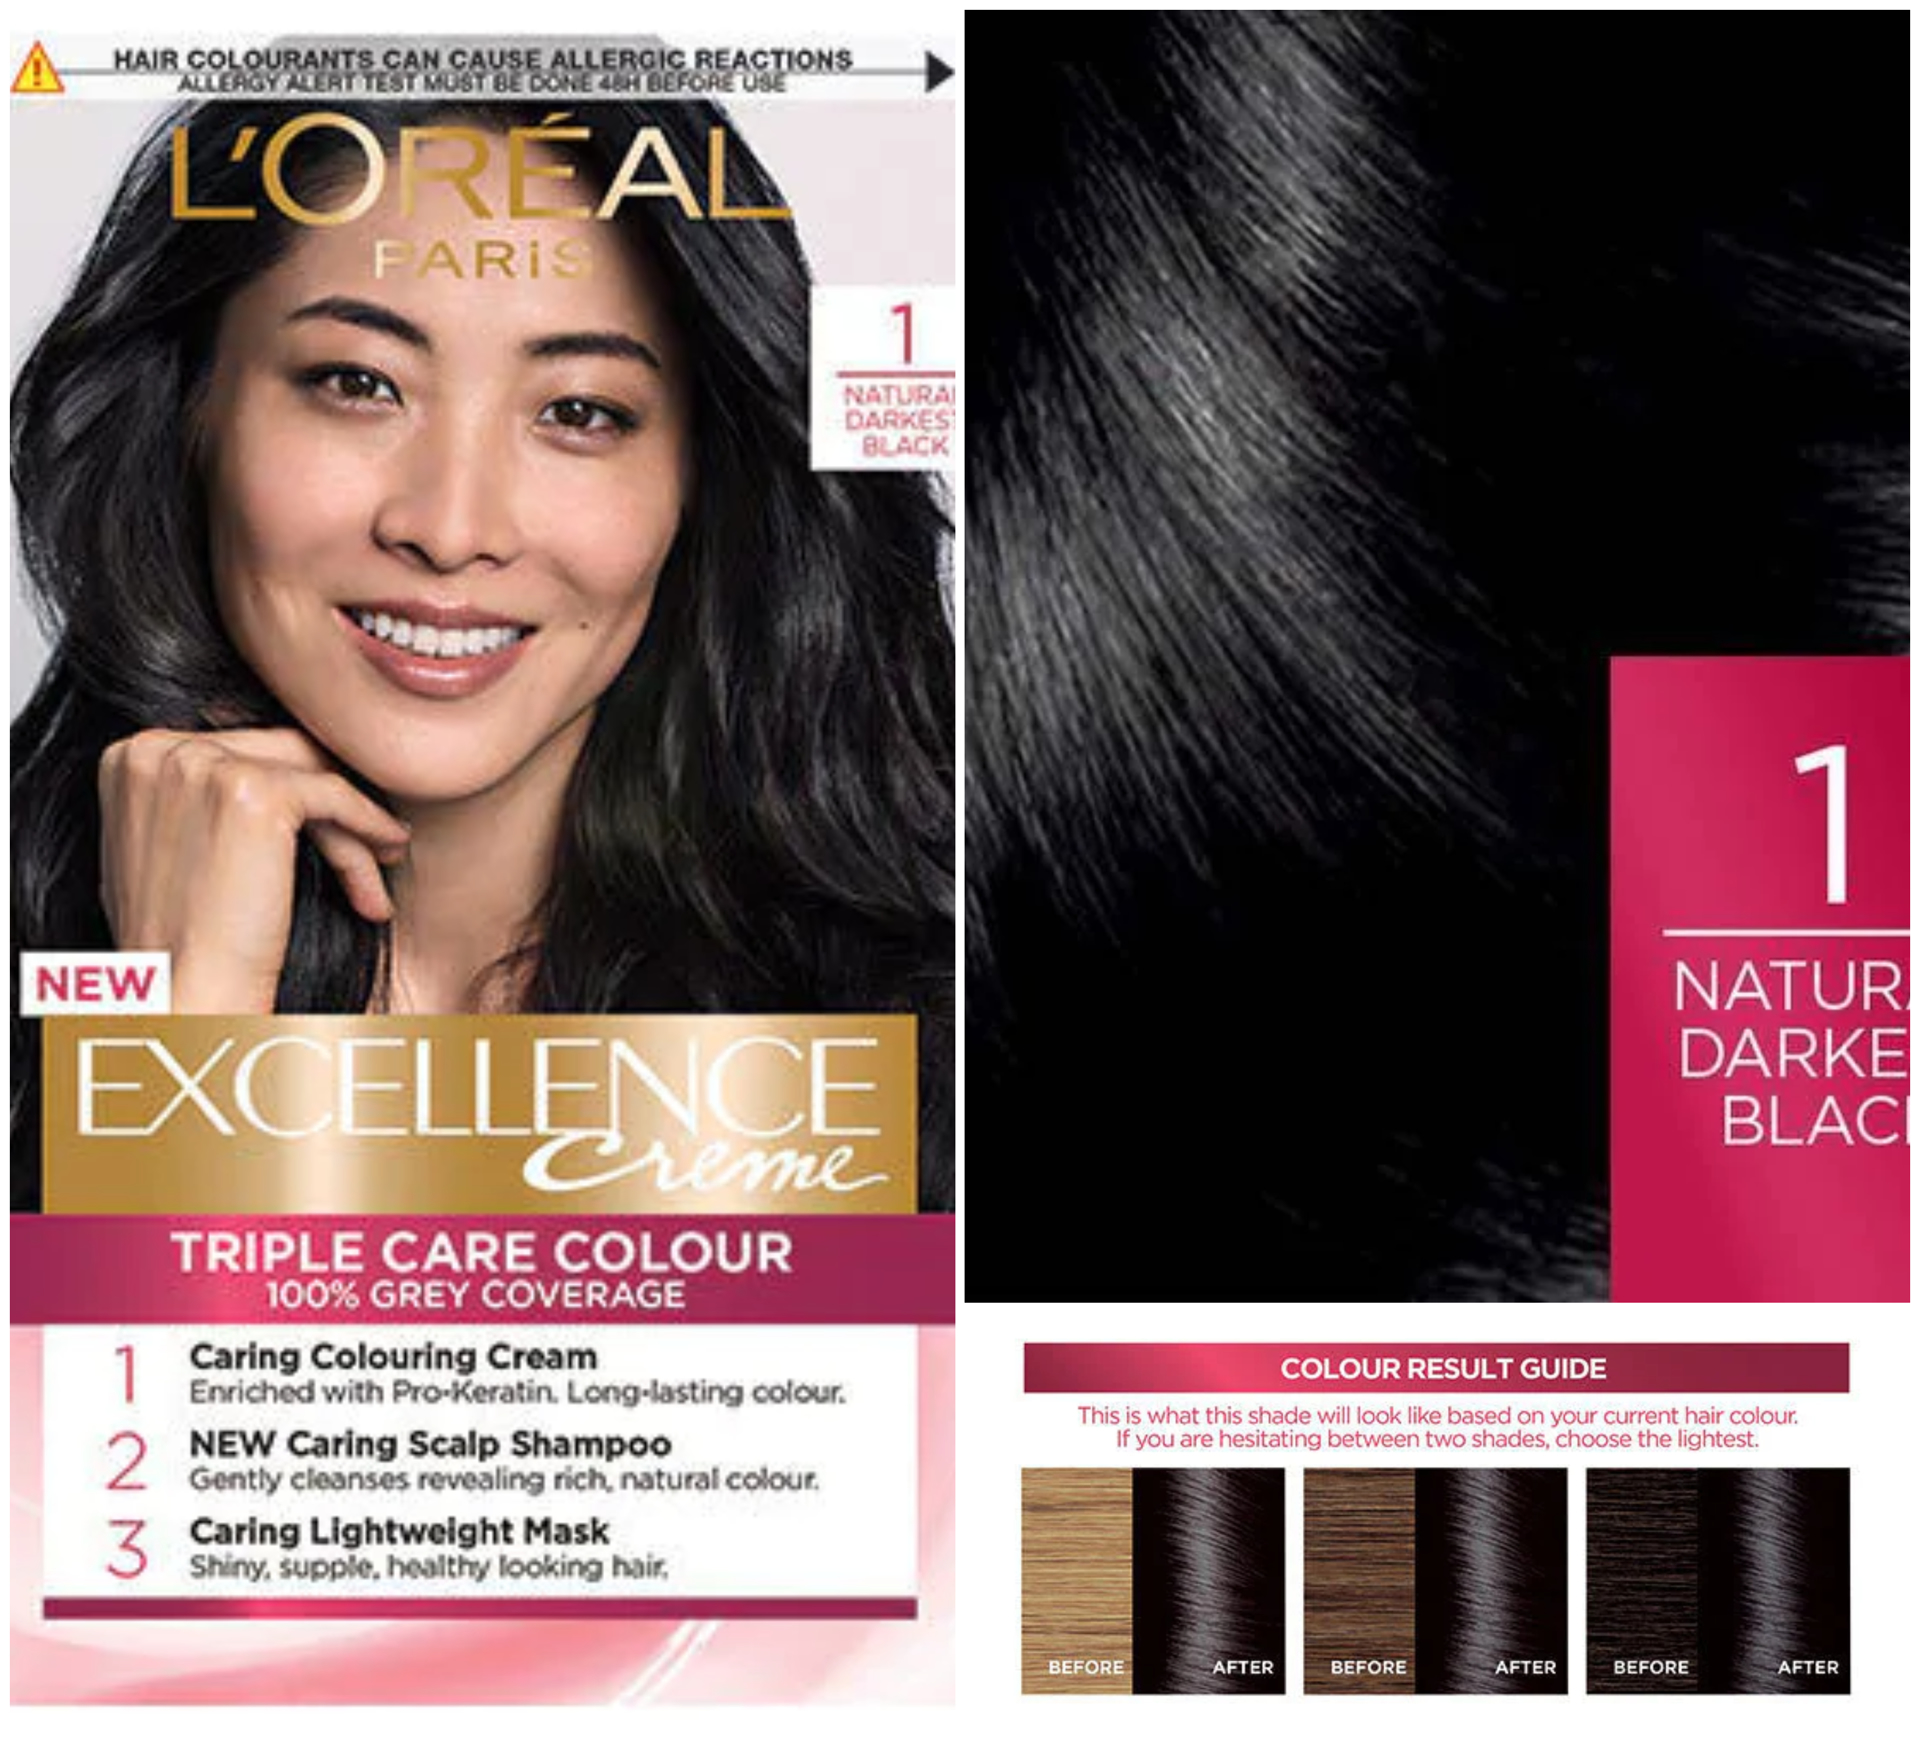 LOreal Paris Excellence Creme 1 Natural Darkest Black Hair Dye. Ecomoj ...